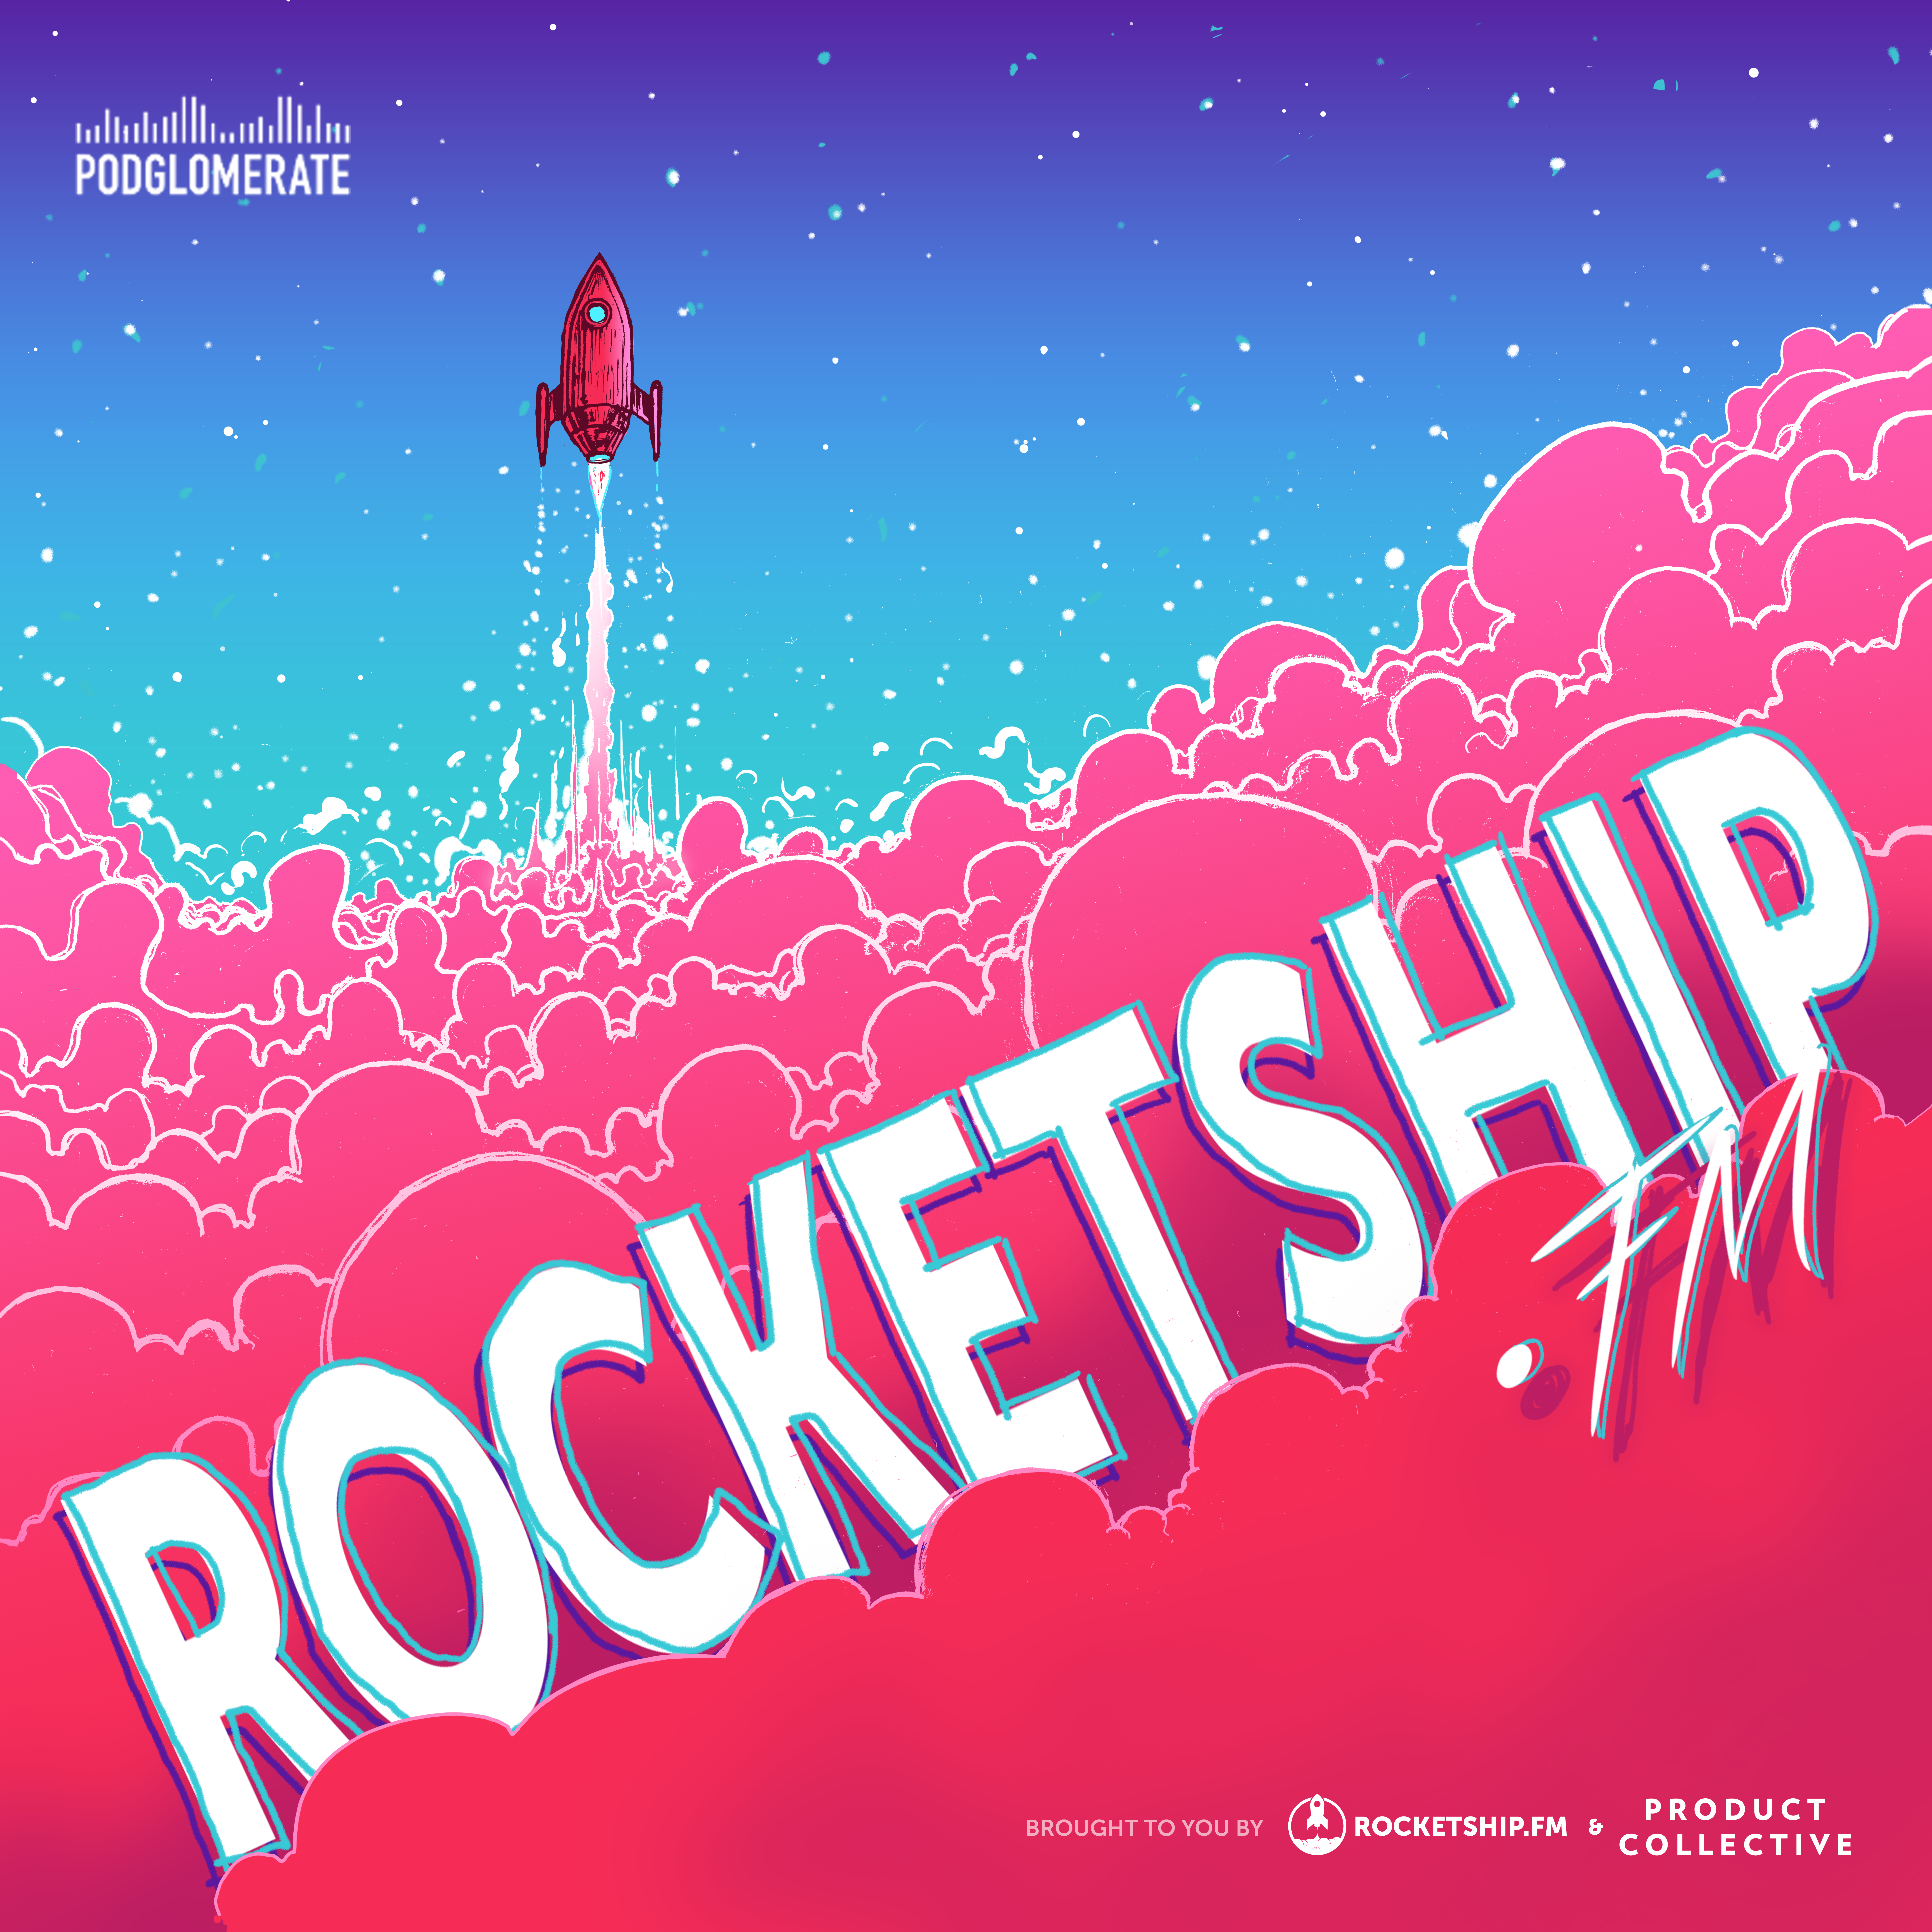 Rocketship FM podcast